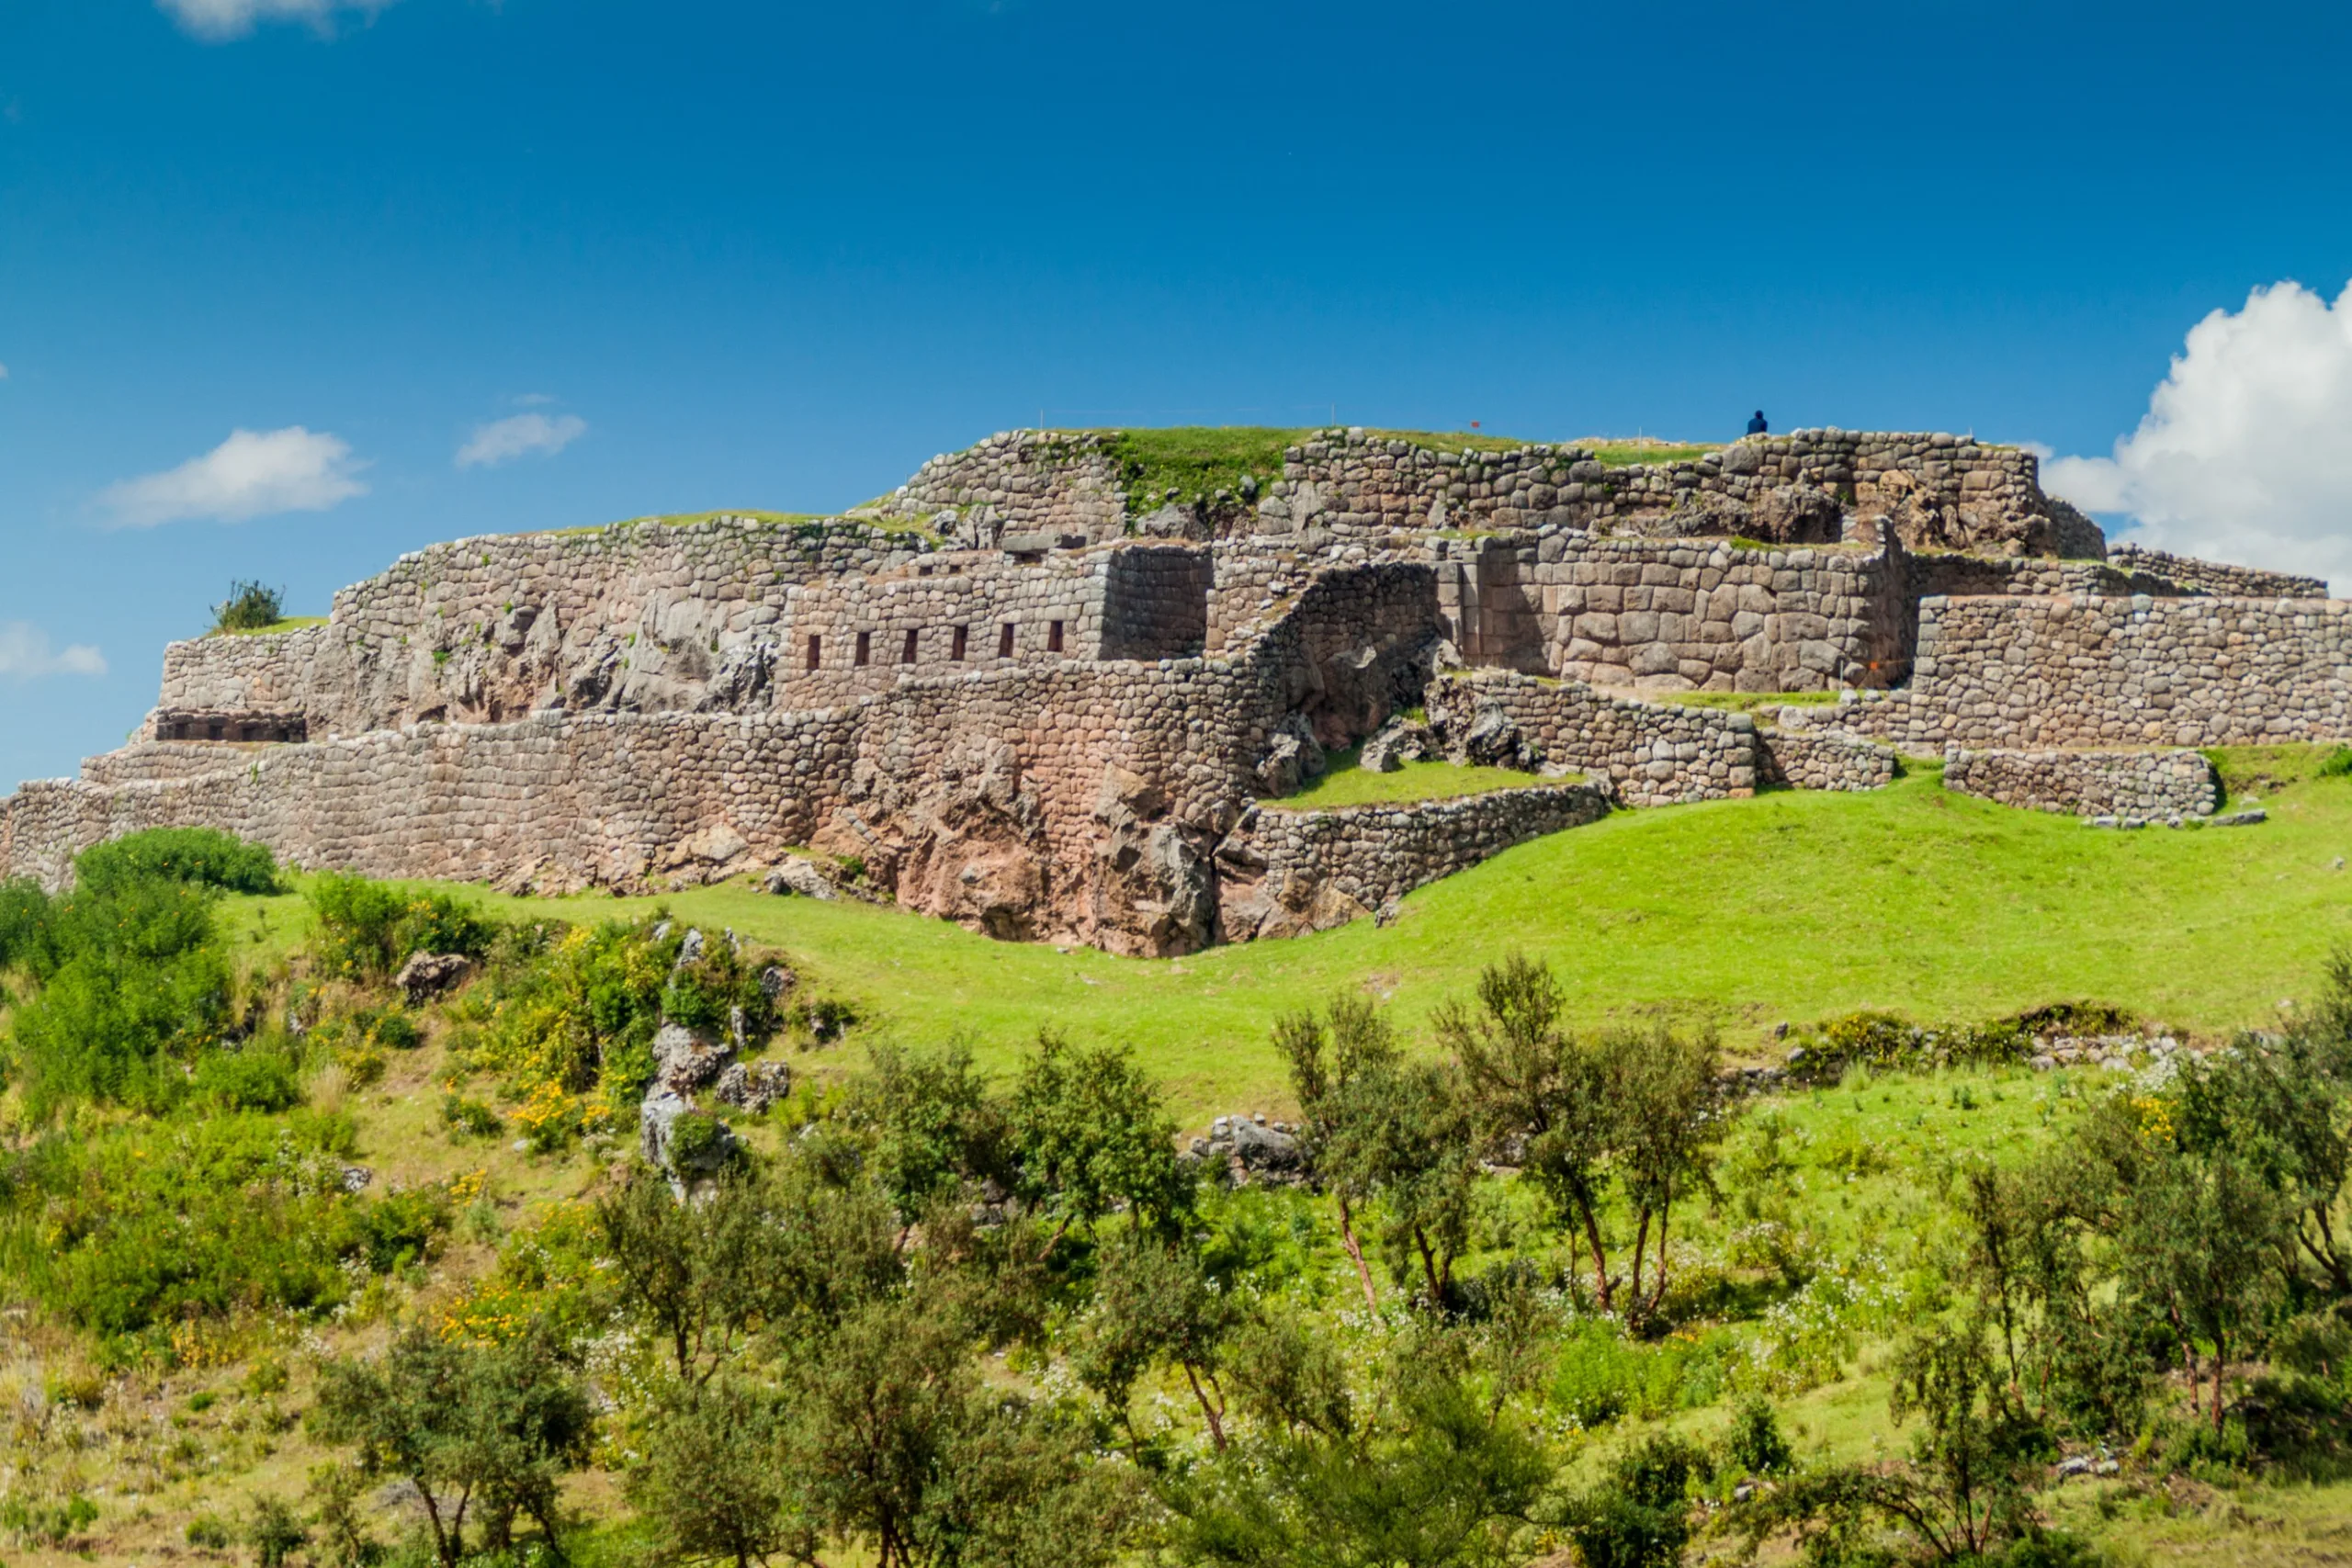 Inca's Ruins Of Pukapukara Near Cuzco, Peru.